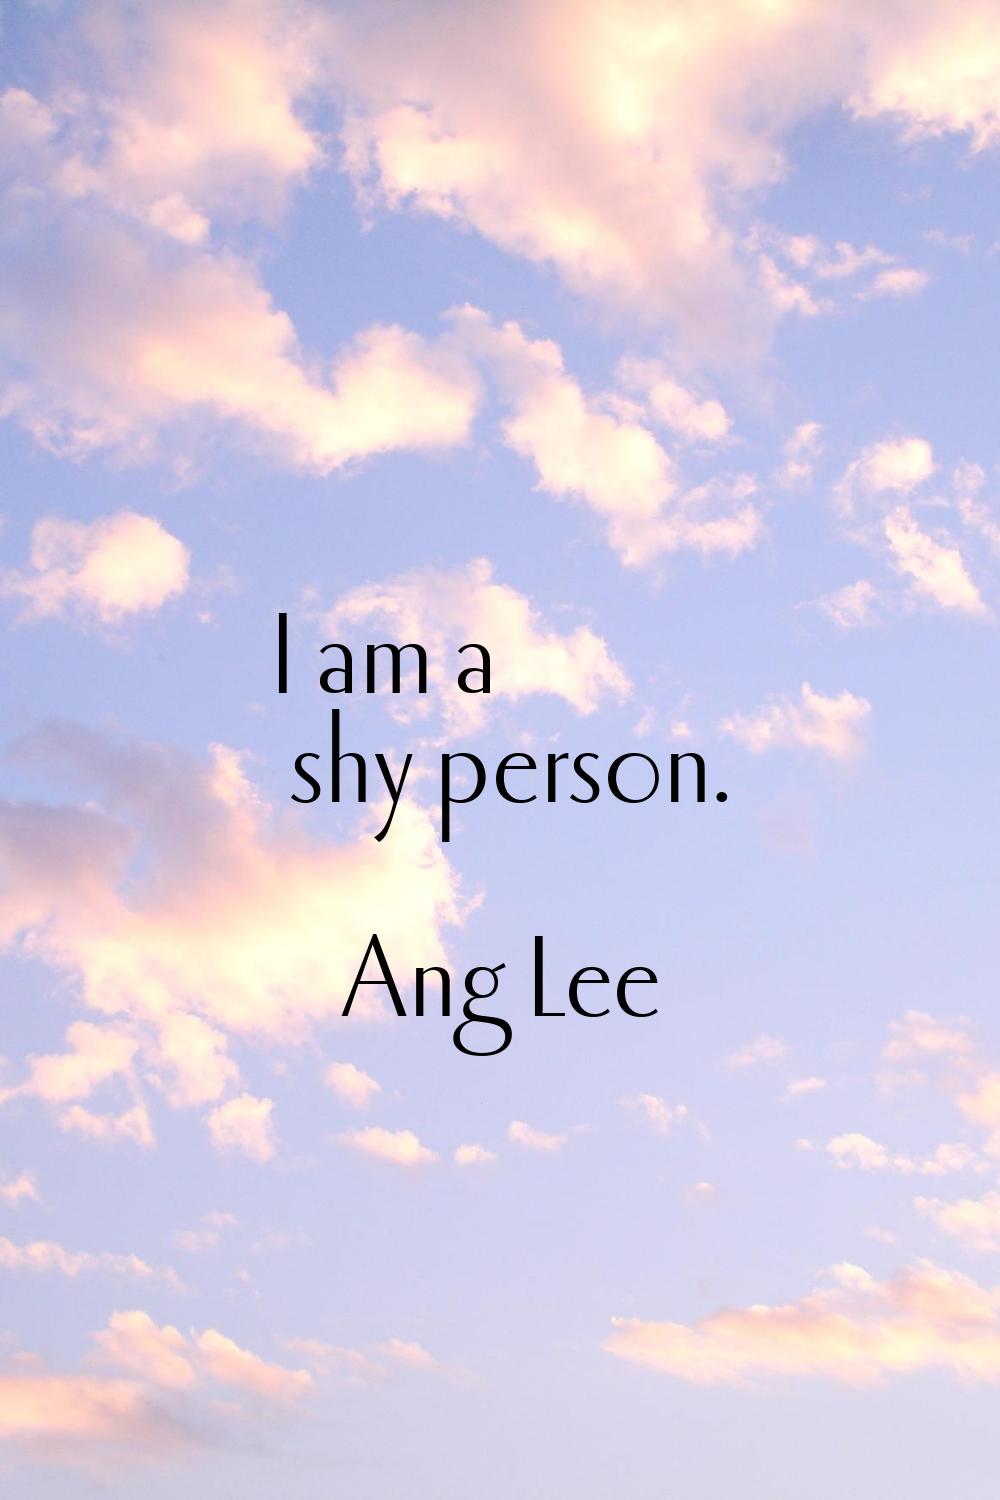 I am a shy person.